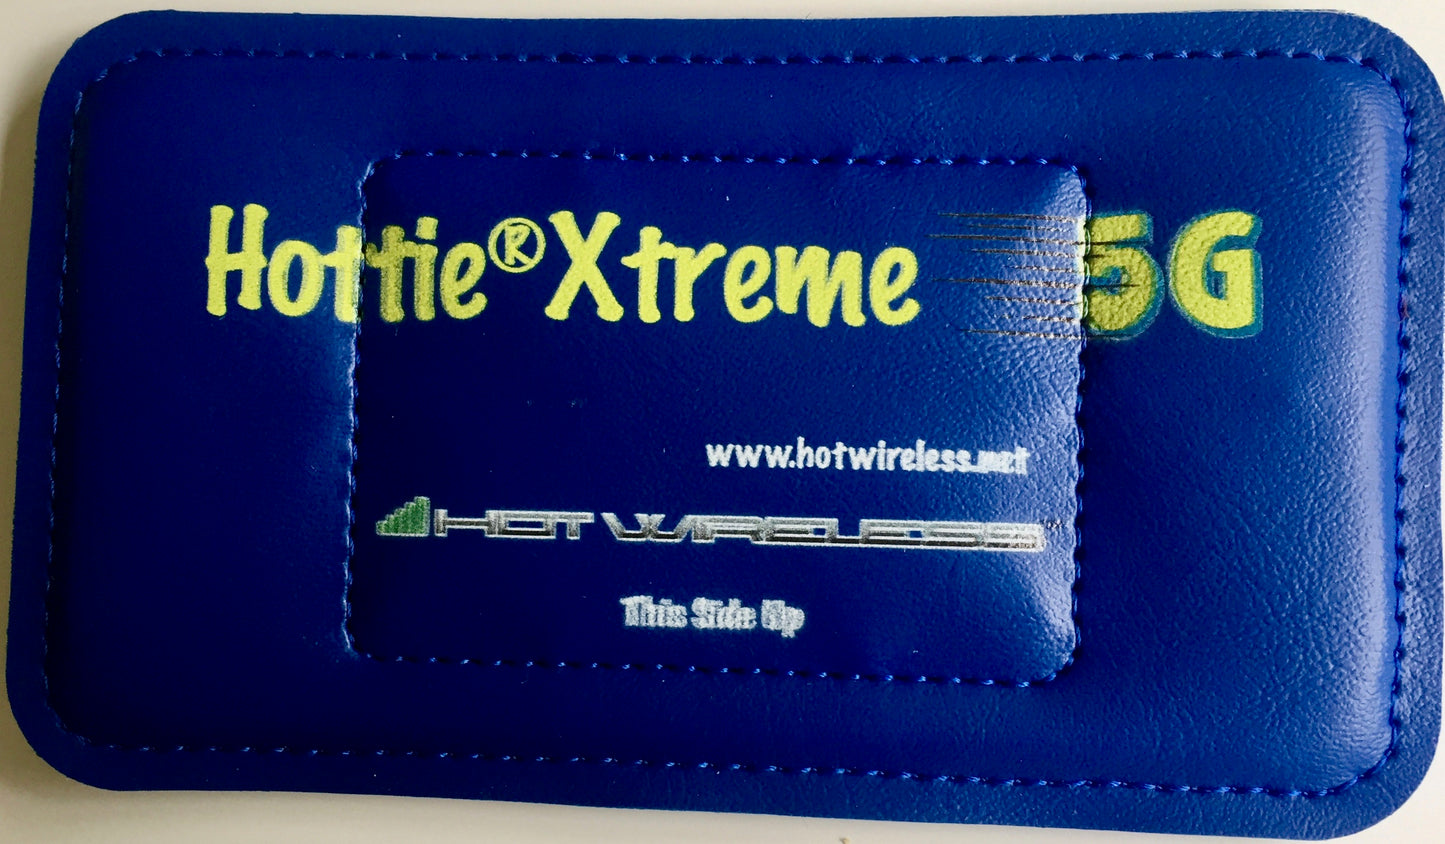 Hottie®Xtreme 5G - Beautiful Blue